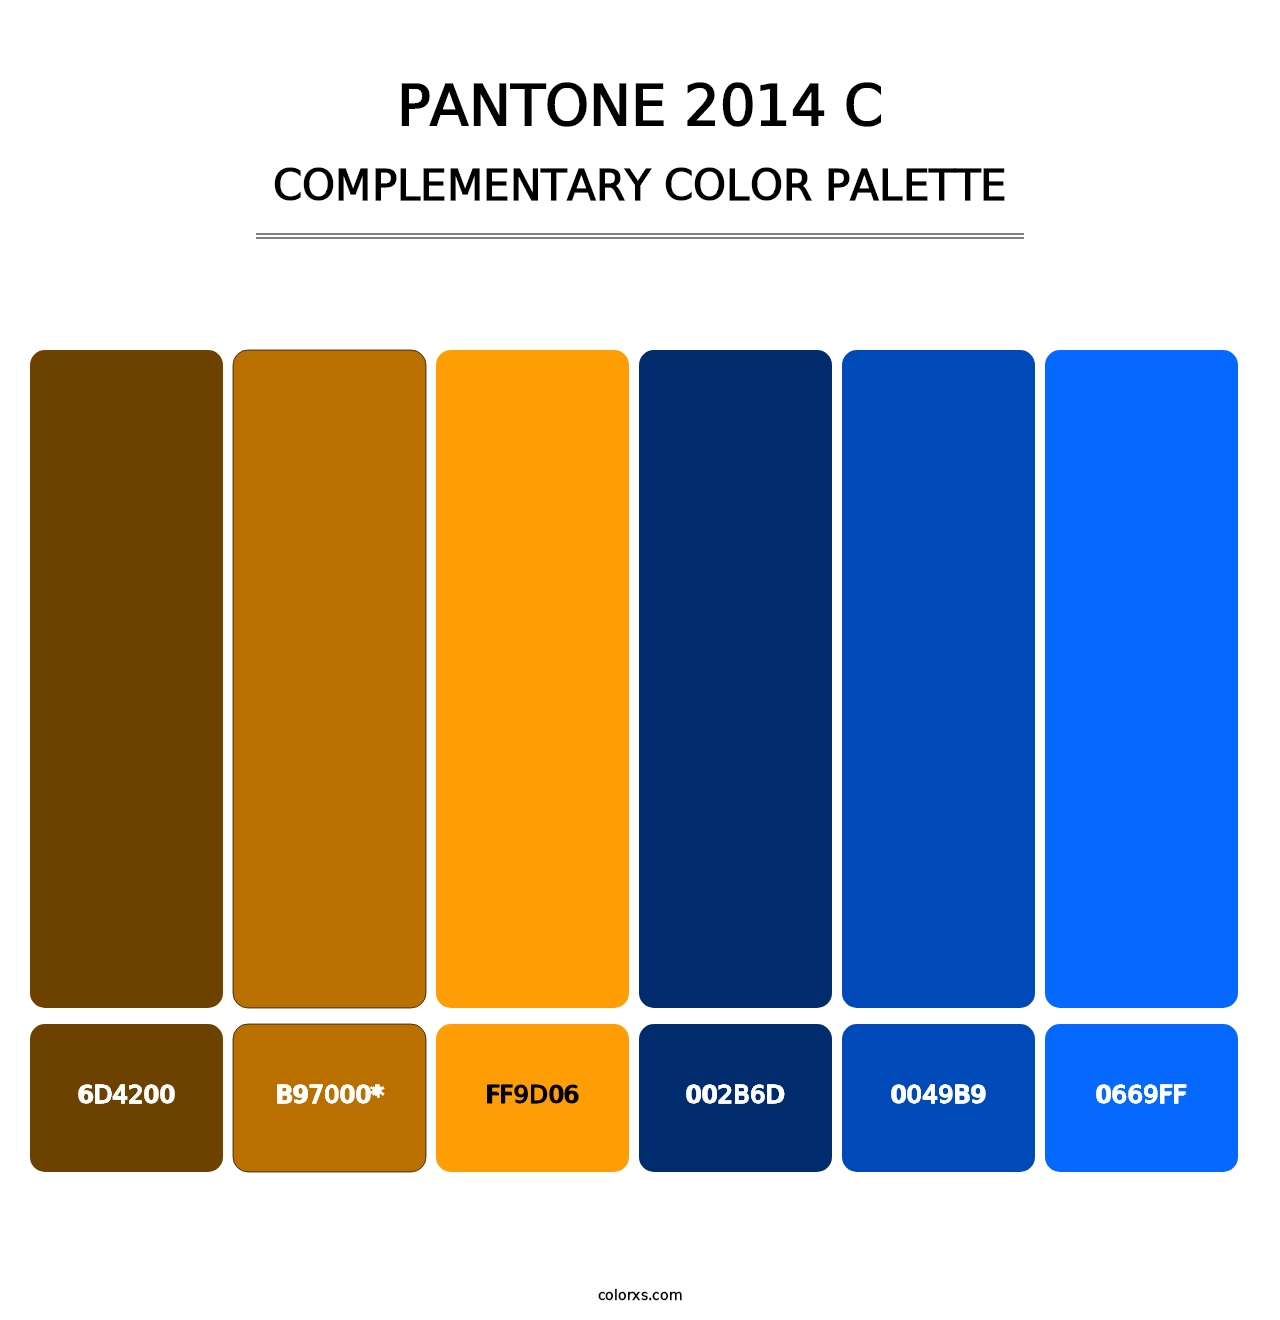 PANTONE 2014 C - Complementary Color Palette